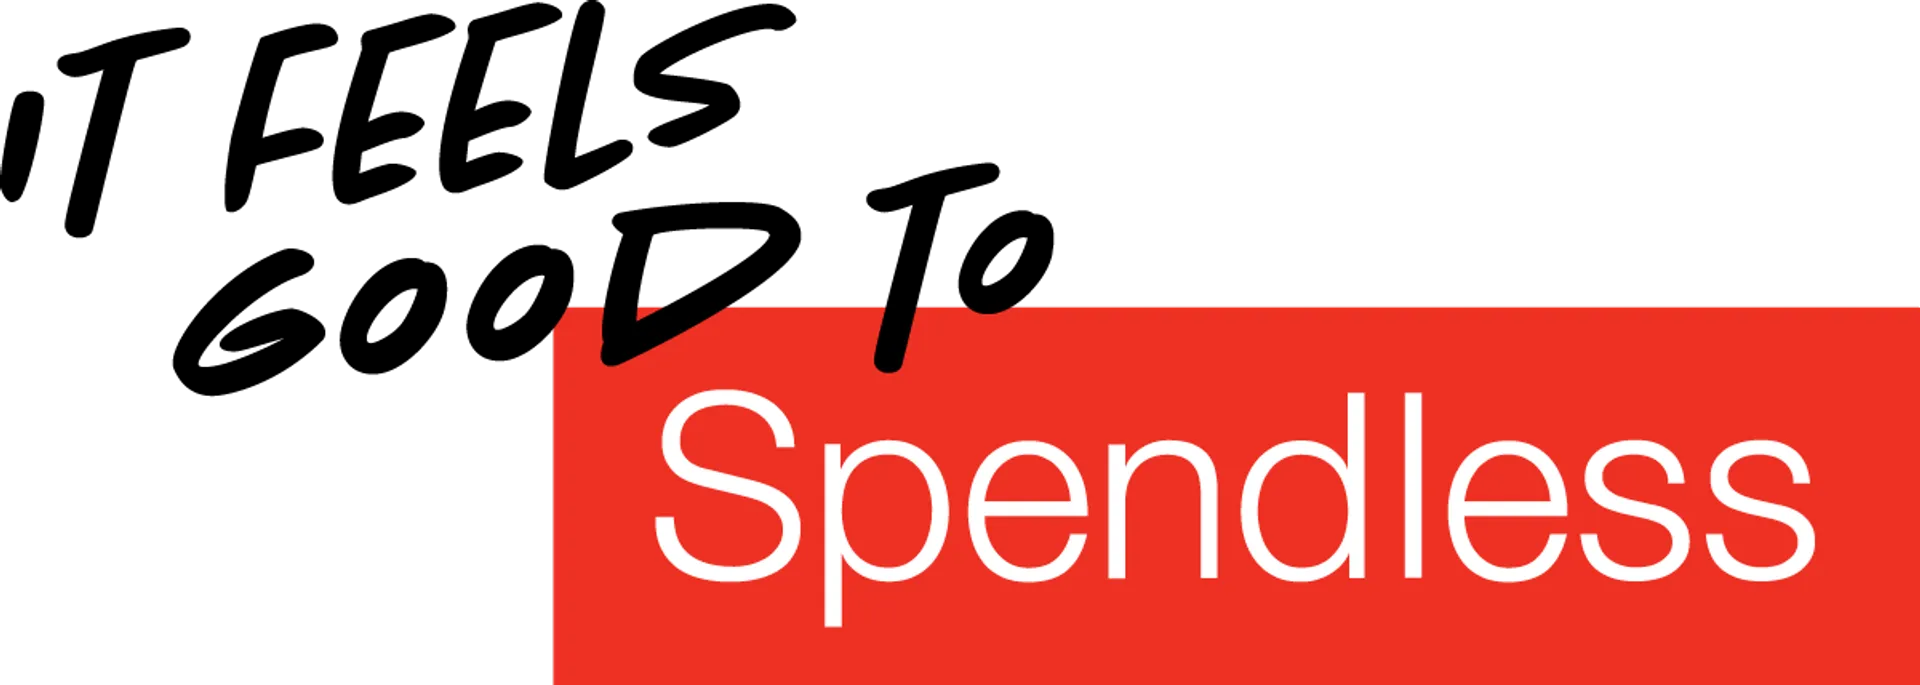 SPENDLESS SHOES logo